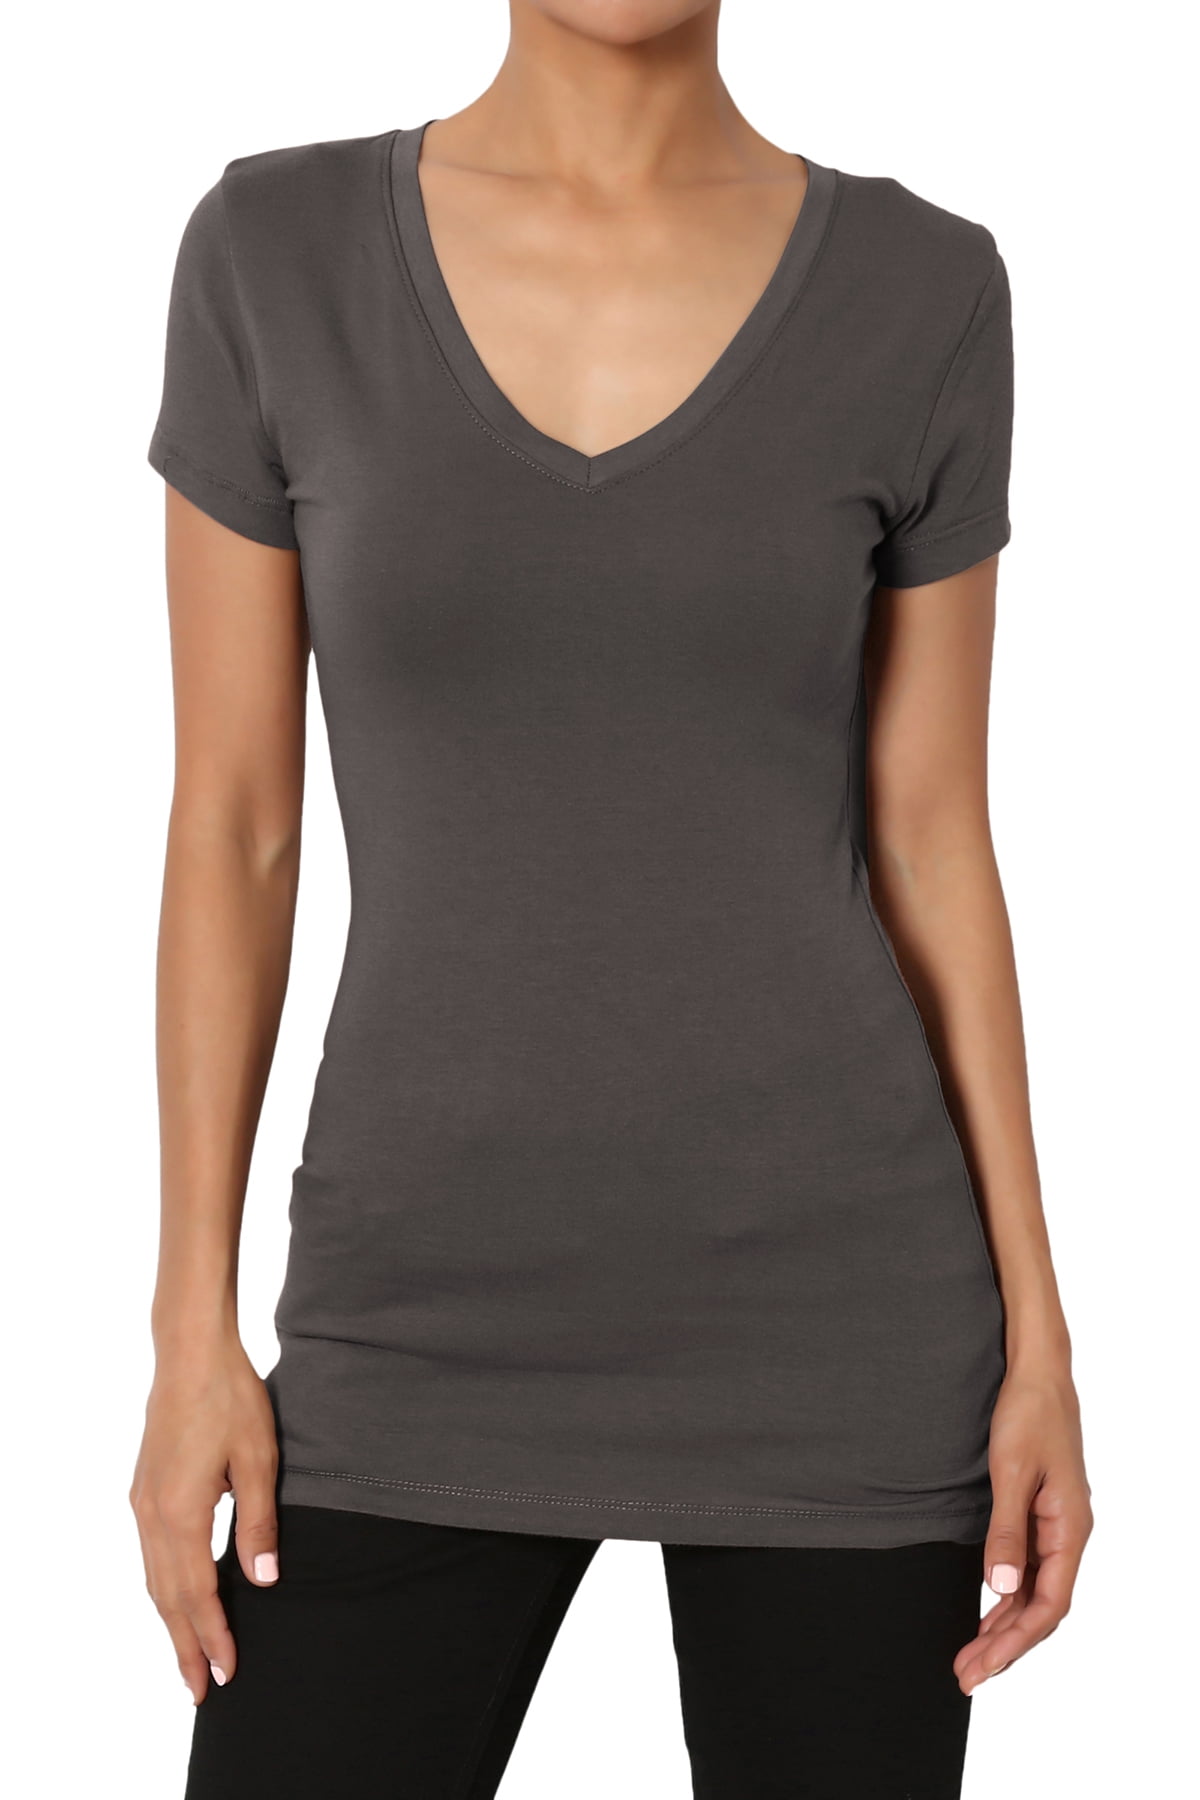 TheMogan Women's Plain Basic V-Neck Slim Fitted Short Sleeve T-Shirts ...